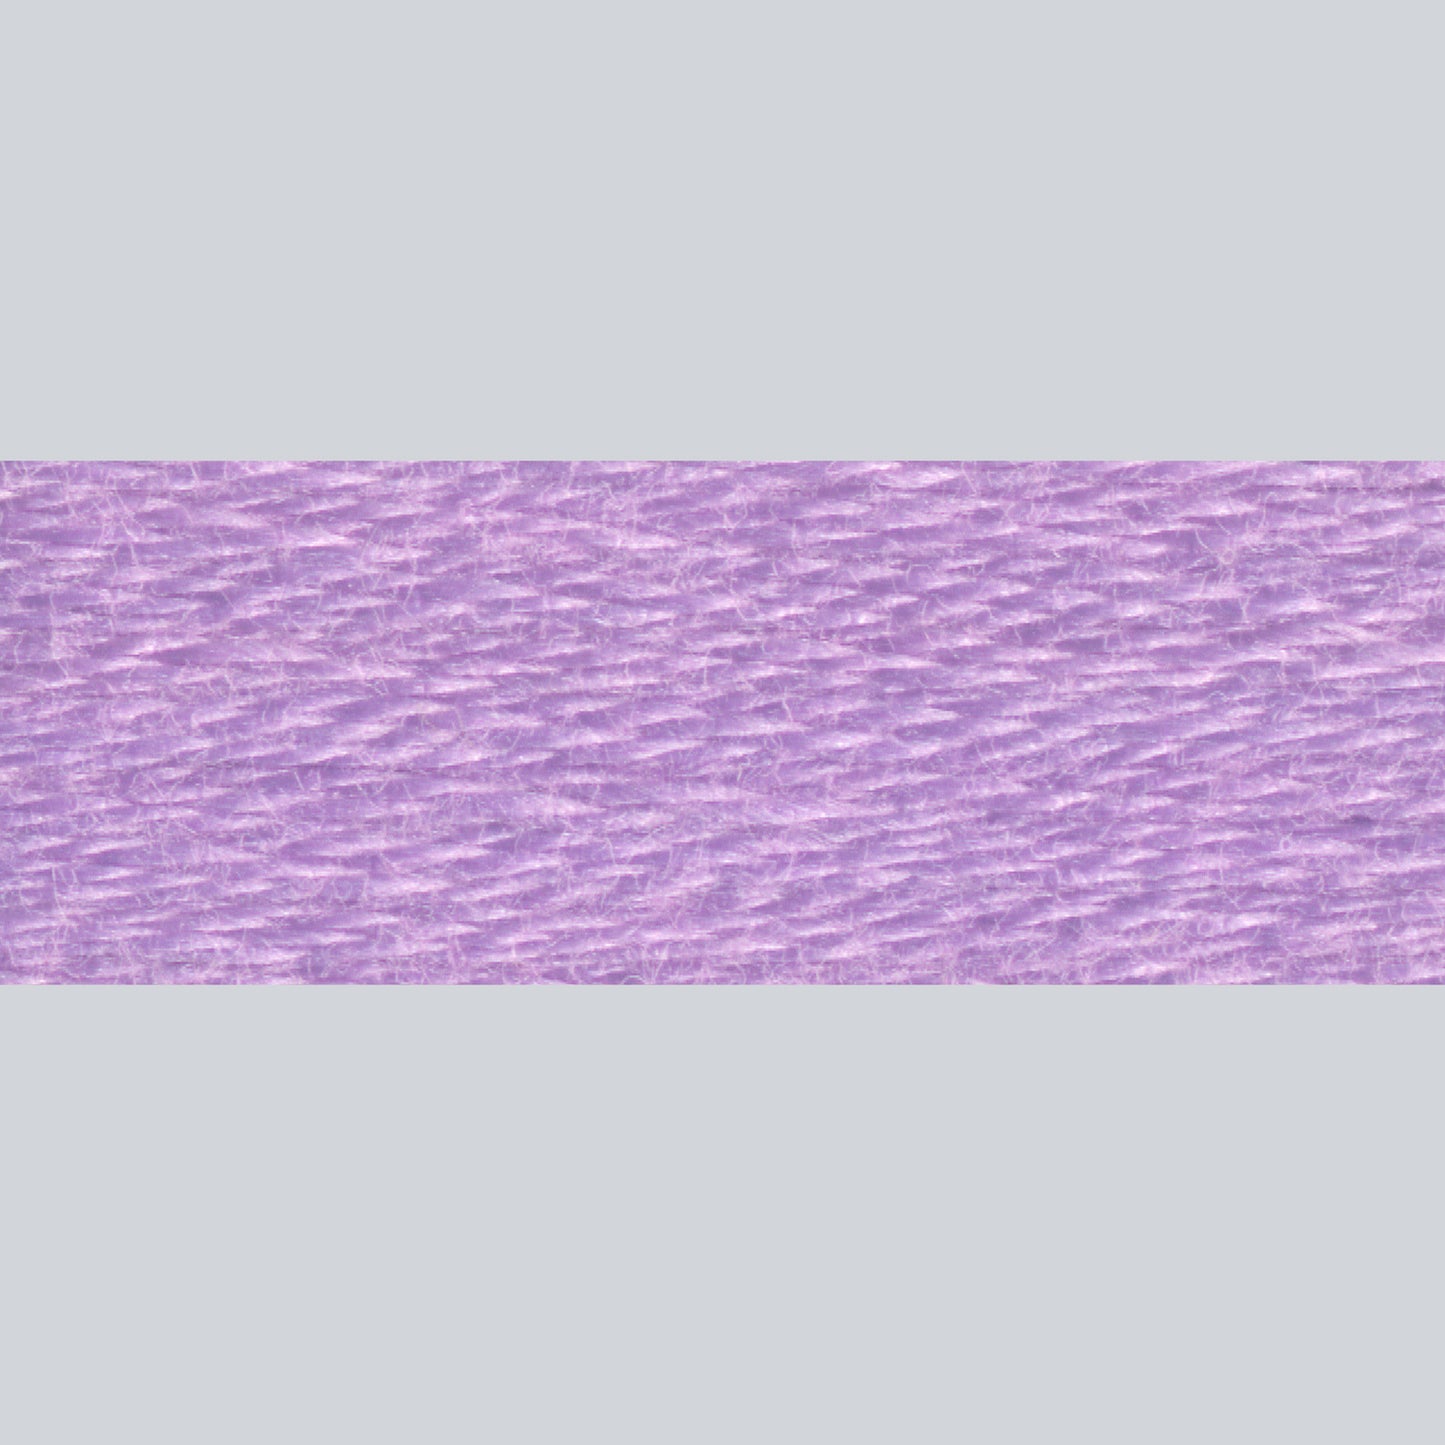 DMC Embroidery Floss - 554 Light Violet Alternative View #1